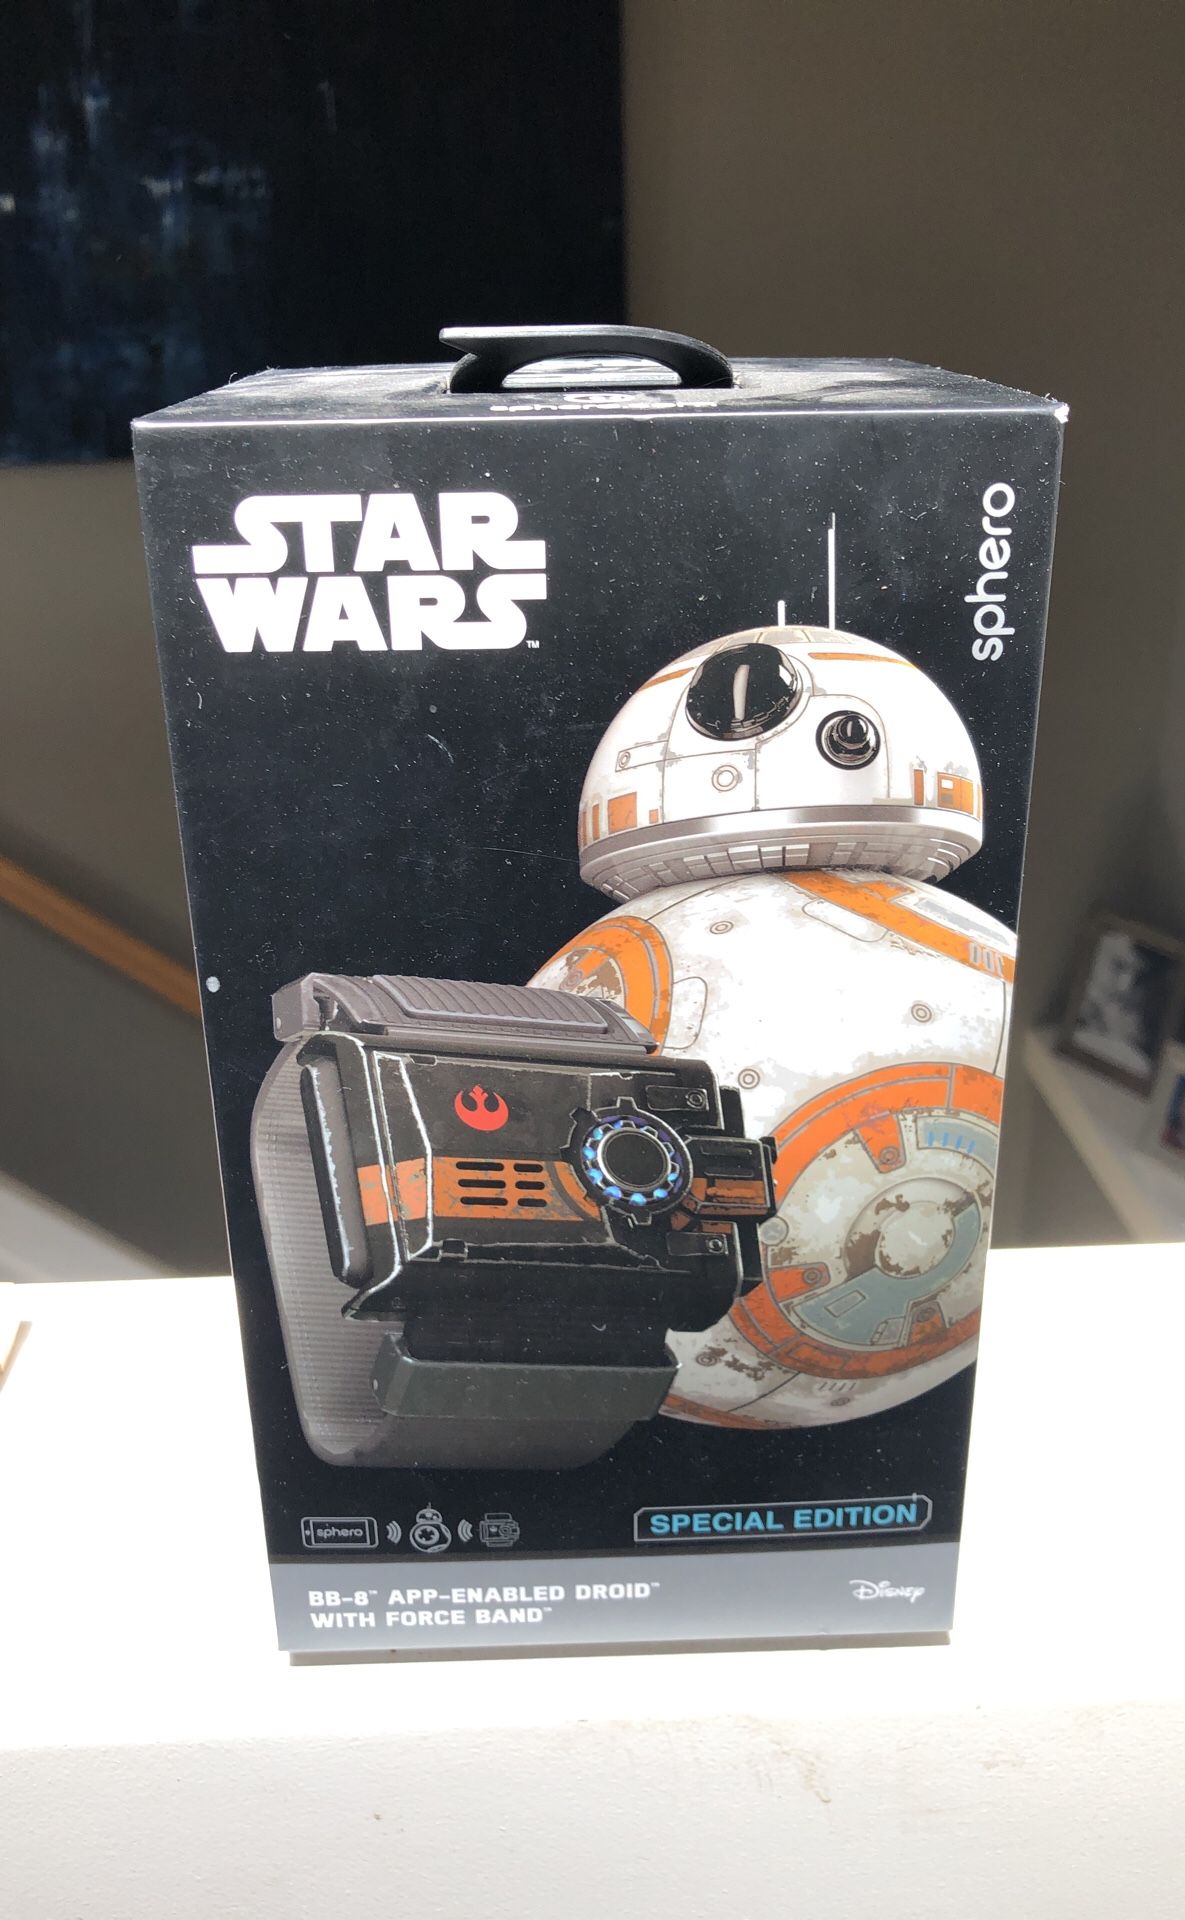 Star Wars BB-8 collectible